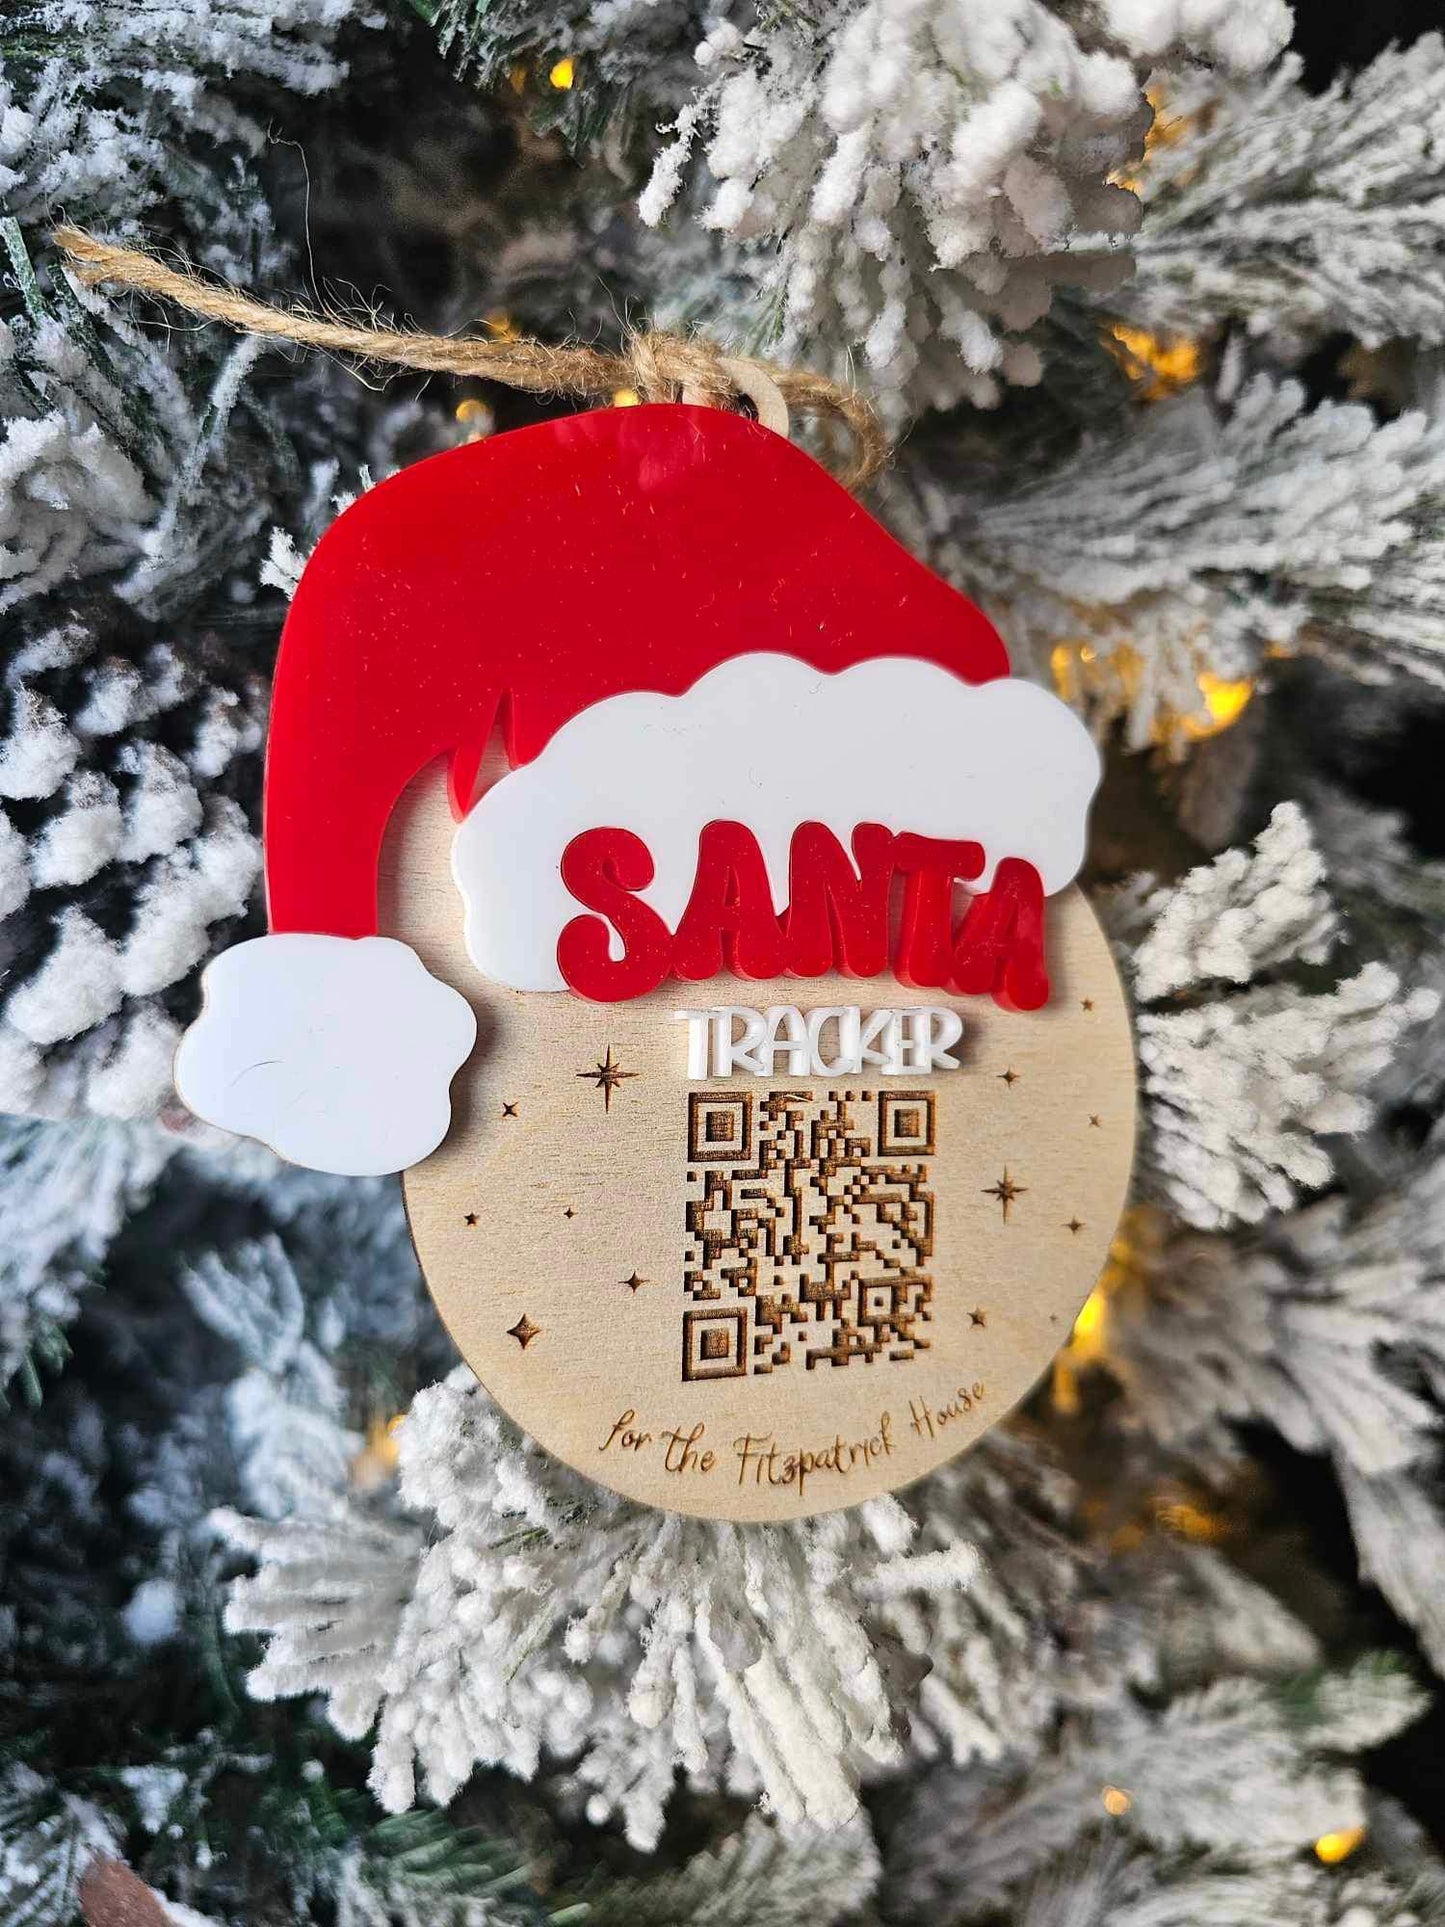 Santa tracker ornament